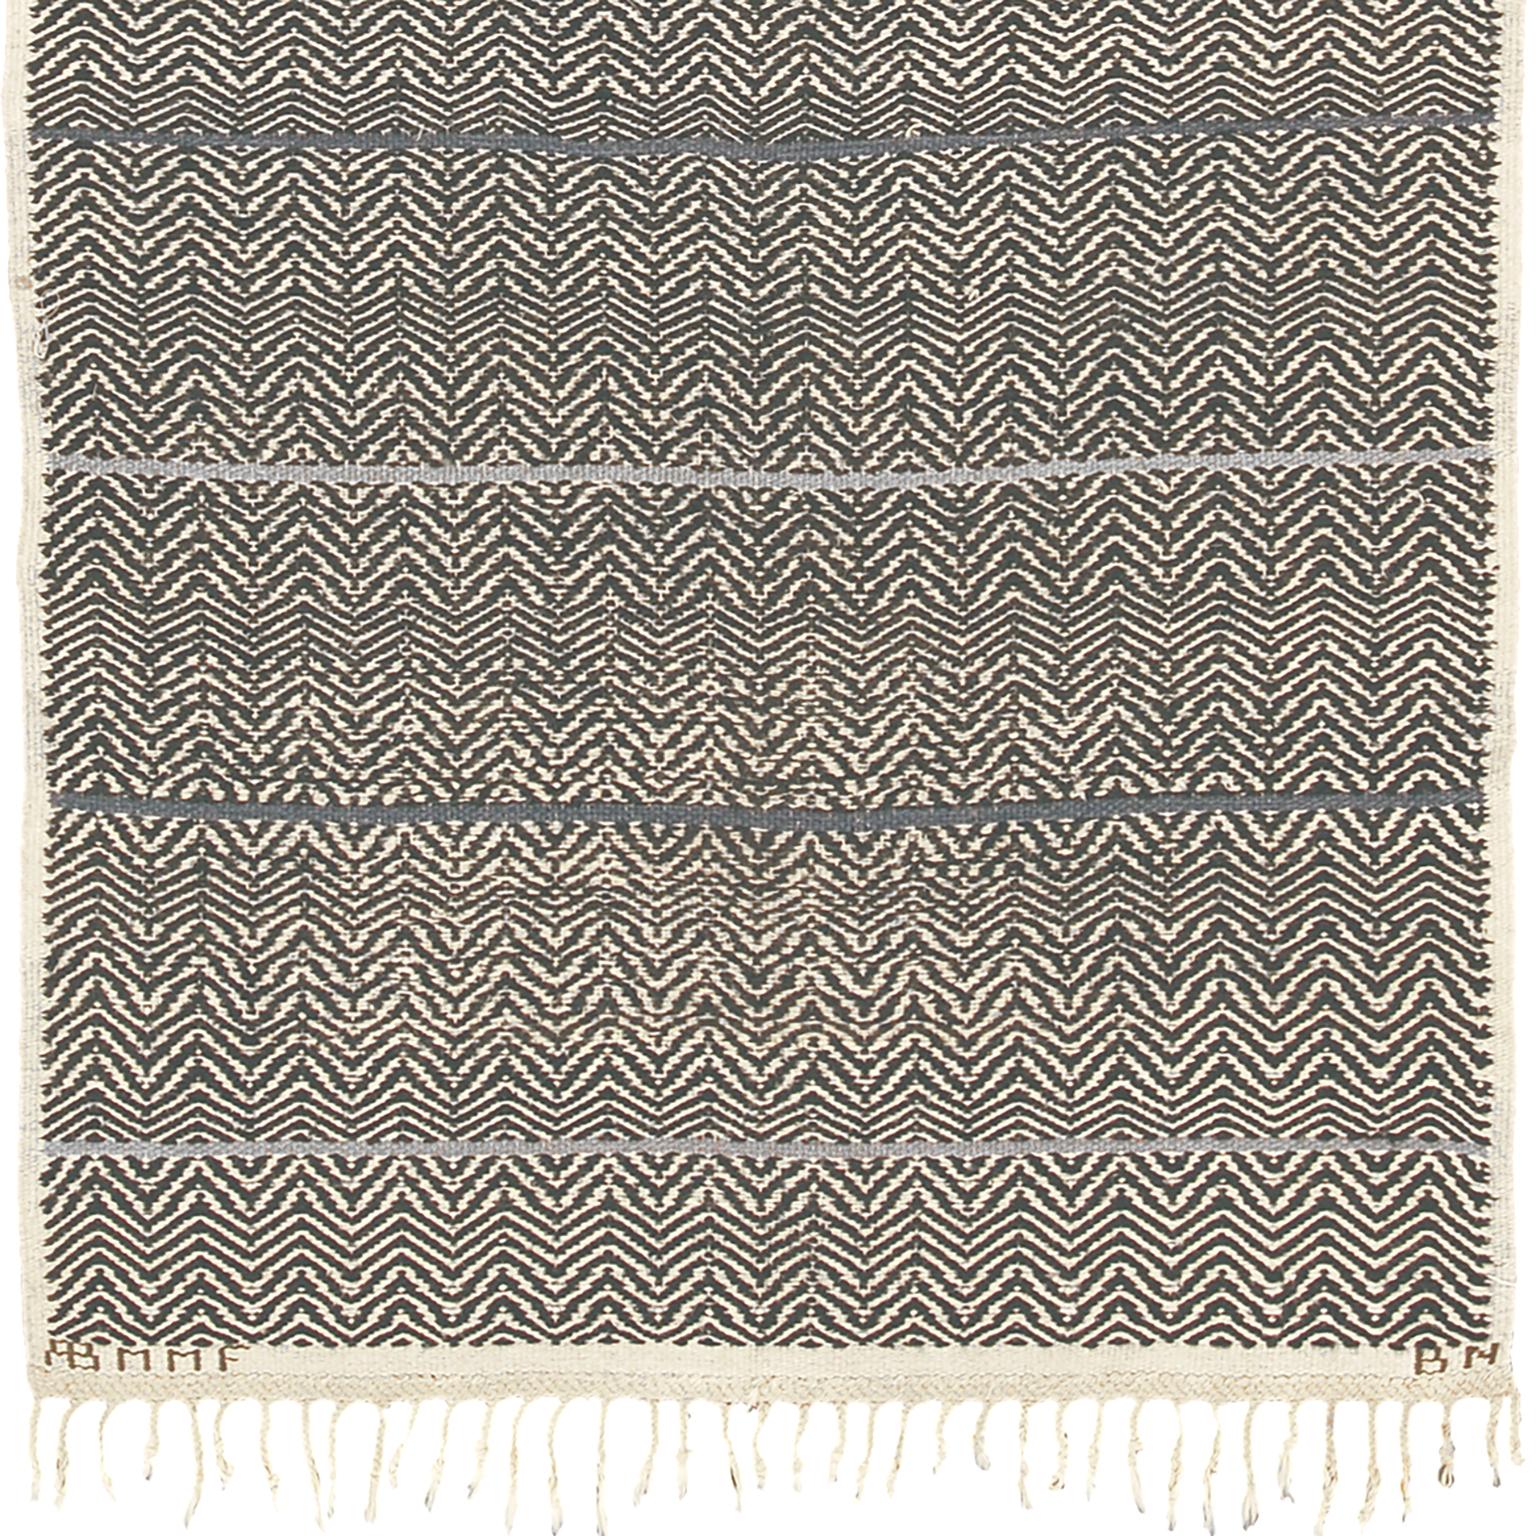 'Rosengång' Swedish flat-weave rug by AB Märta Måås-Fjetterström
Sweden, circa 1943
Initialed: AB MMF, BN (AB Märta Måås-Fjetterström, Barbro Nilsson)
Handwoven.